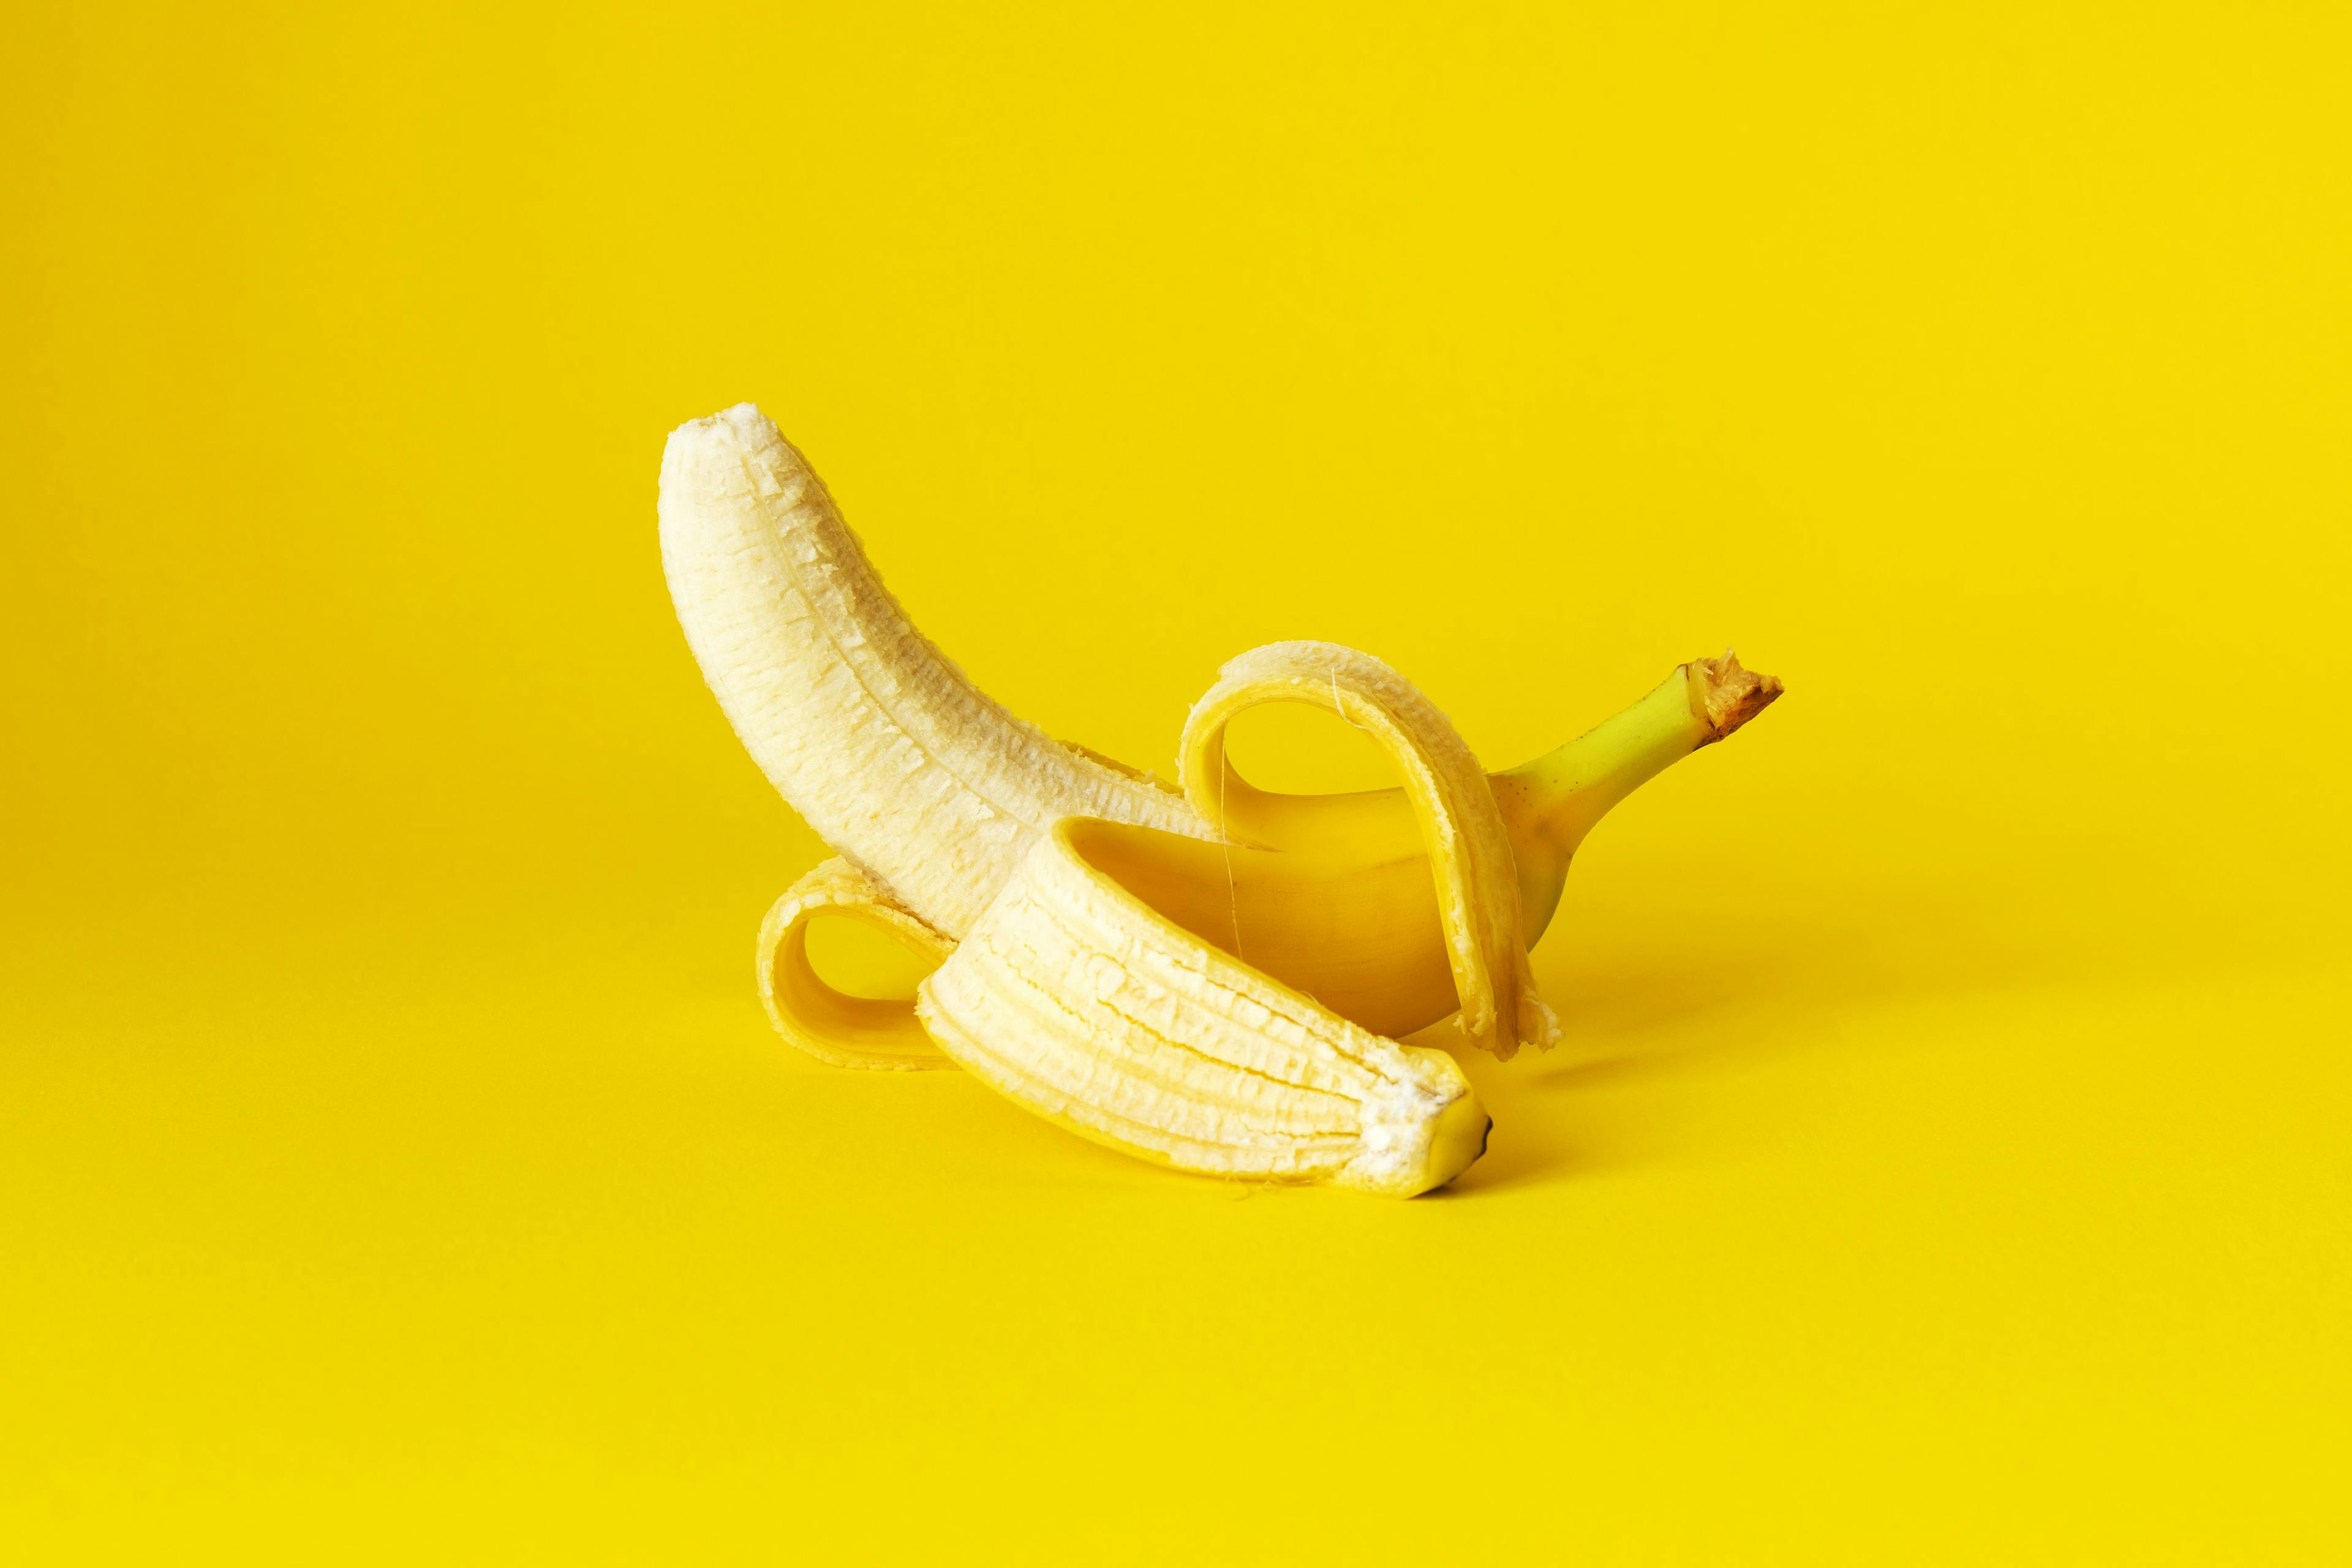 Is a Banana a Better Phallic Symbol Than a Gun?